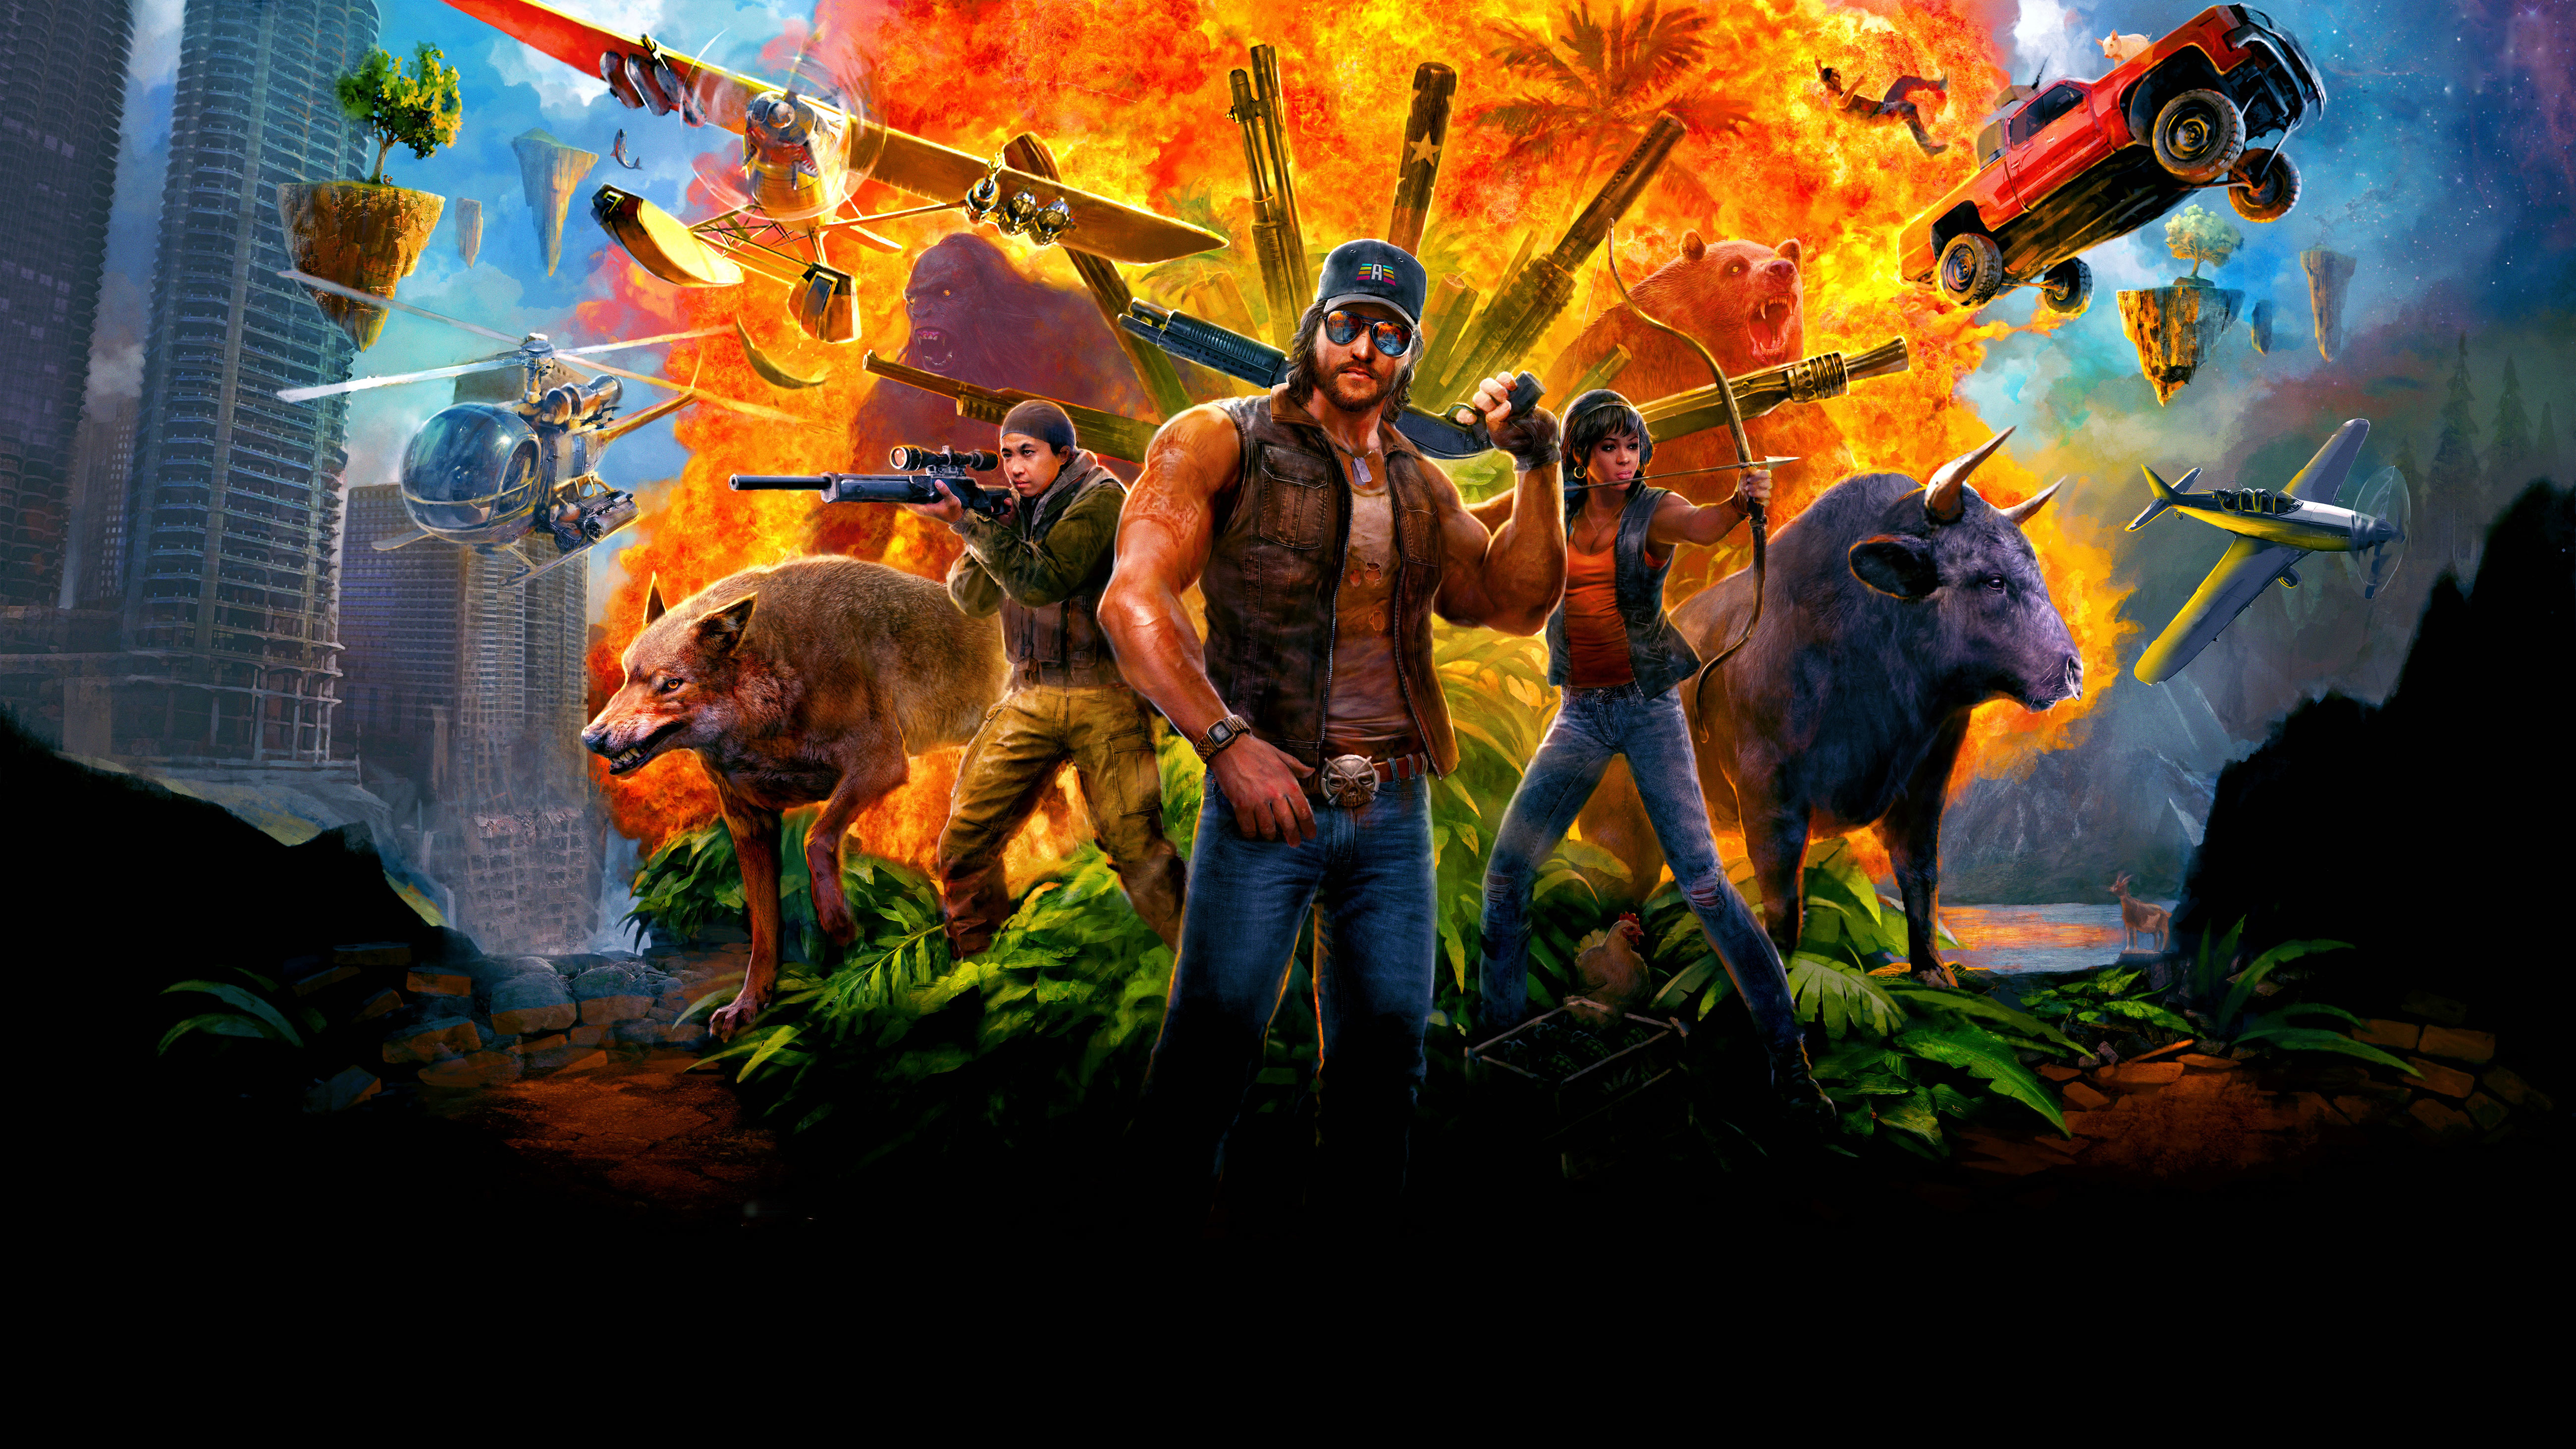 Desktop Wallpaper Far Cry 4 Video Game Elephant Hd Image Picture  Background Lmaut